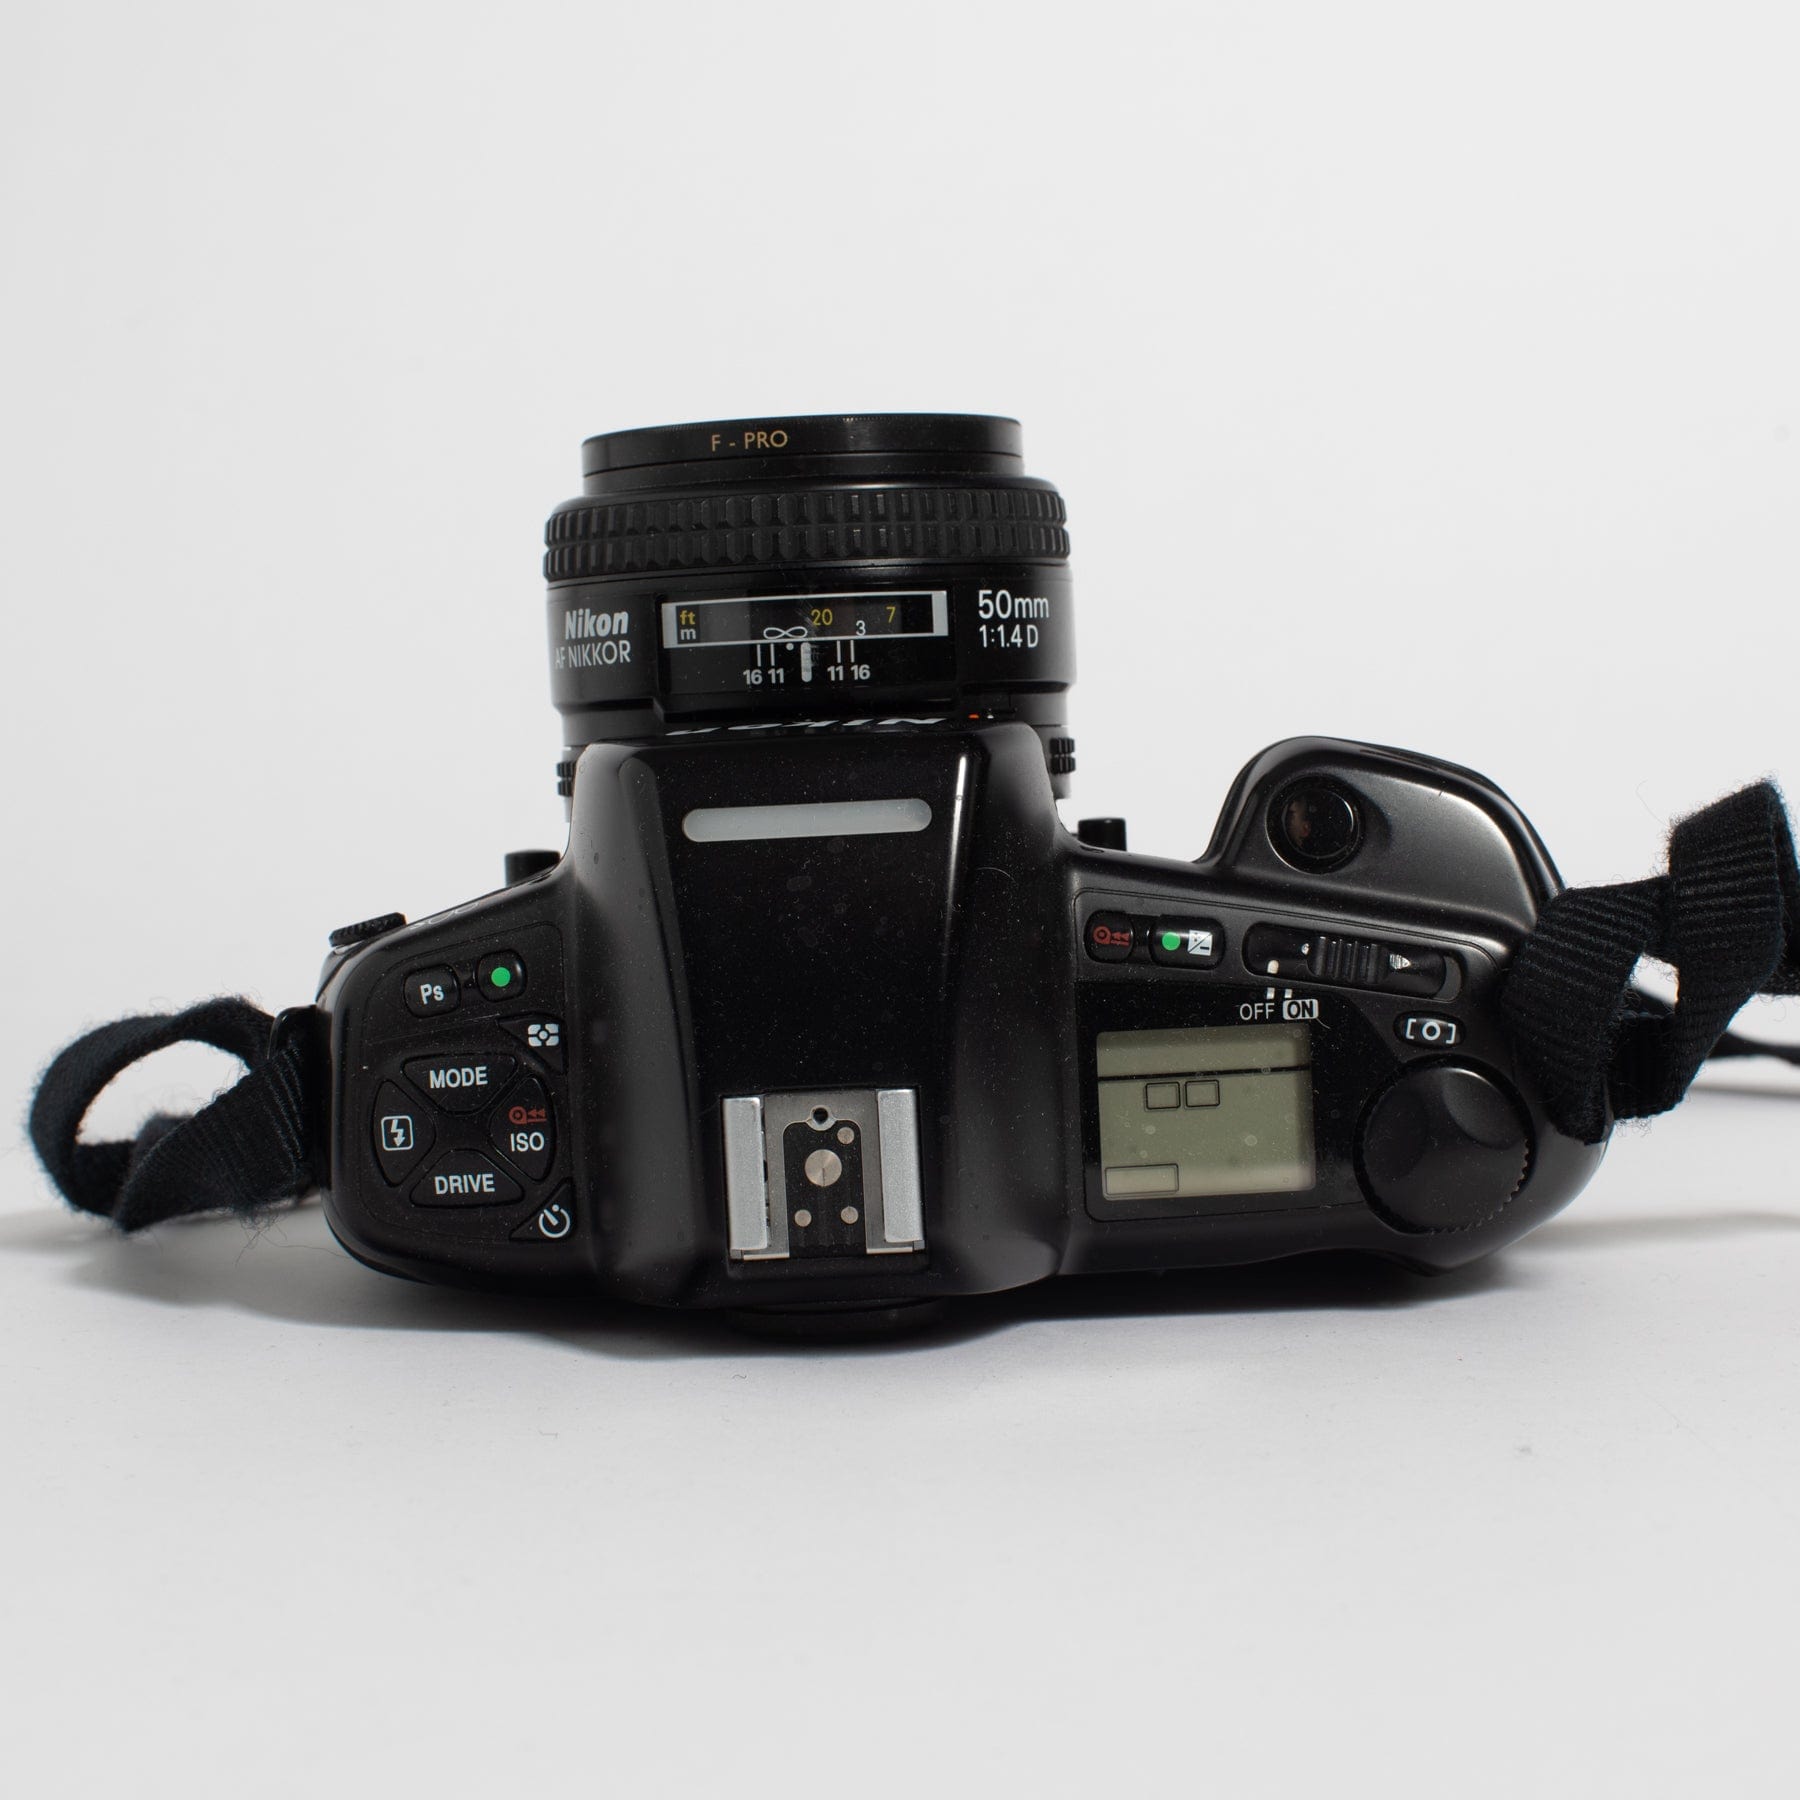 Nikon N90s with AF 50mm f/1.4 D Lens – Film Supply Club